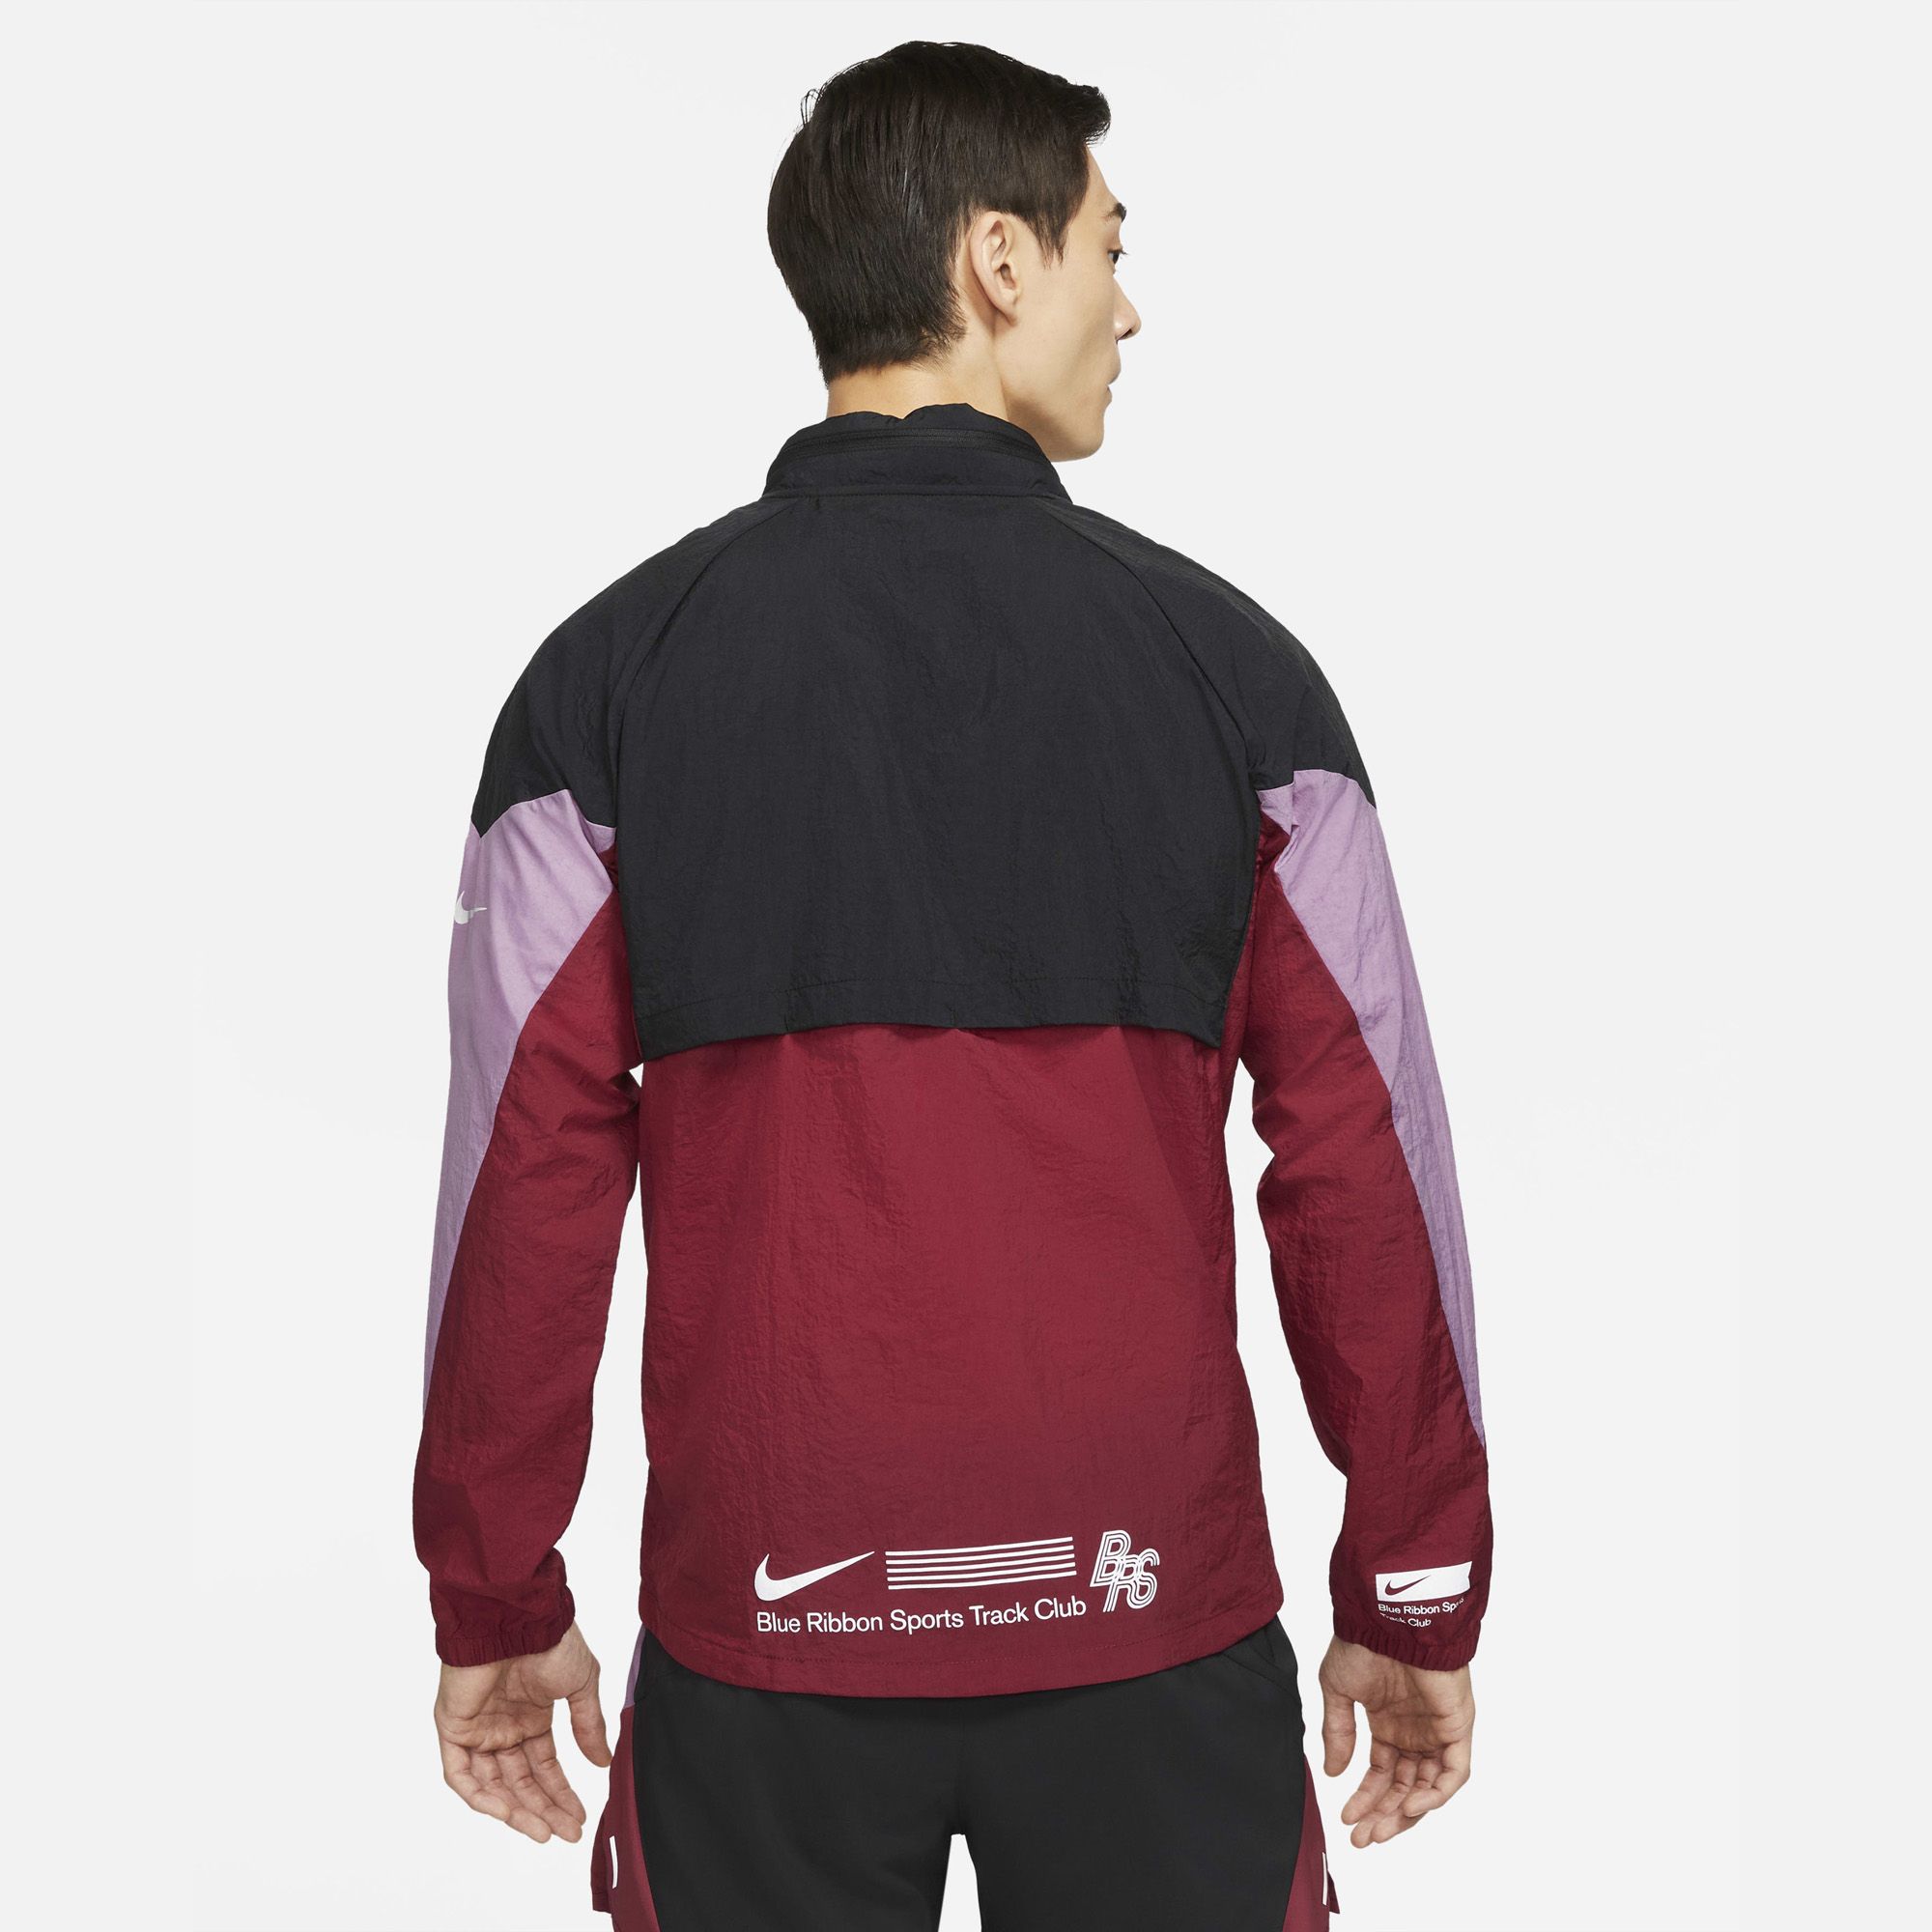  Nike Blue Ribbon Sports Windrunner Jacket - Red 